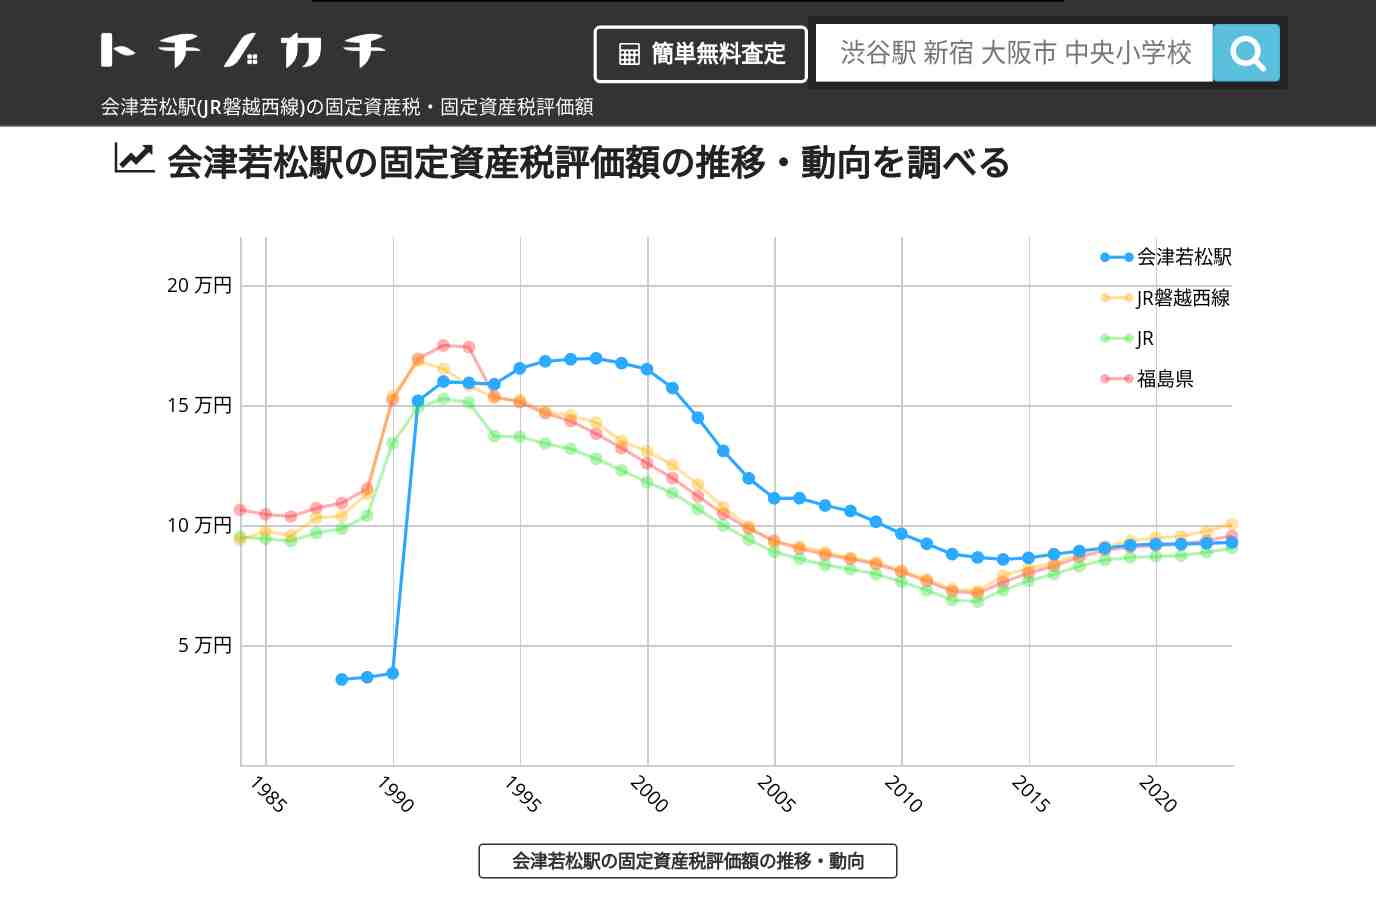 会津若松駅(JR磐越西線)の固定資産税・固定資産税評価額 | トチノカチ